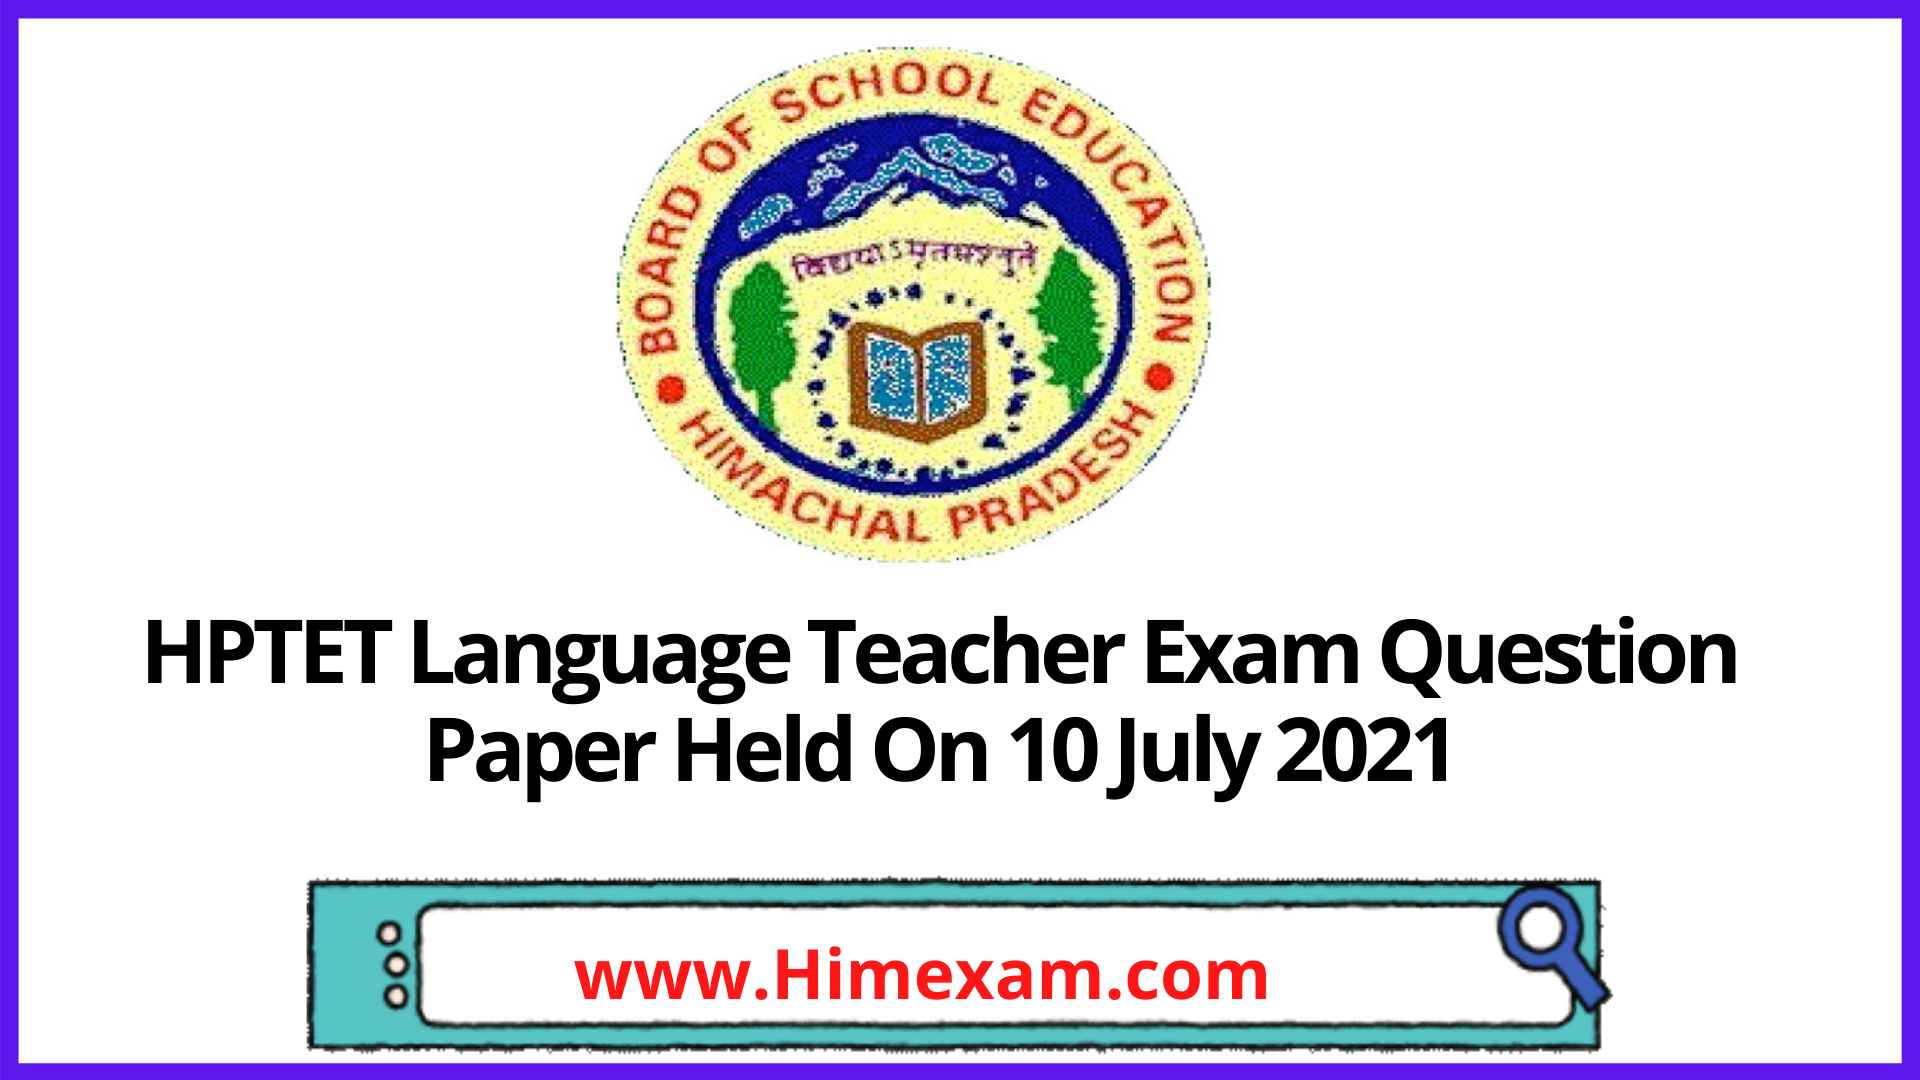 HPTET Language Teacher Exam Question Paper Held On 10 July 2021